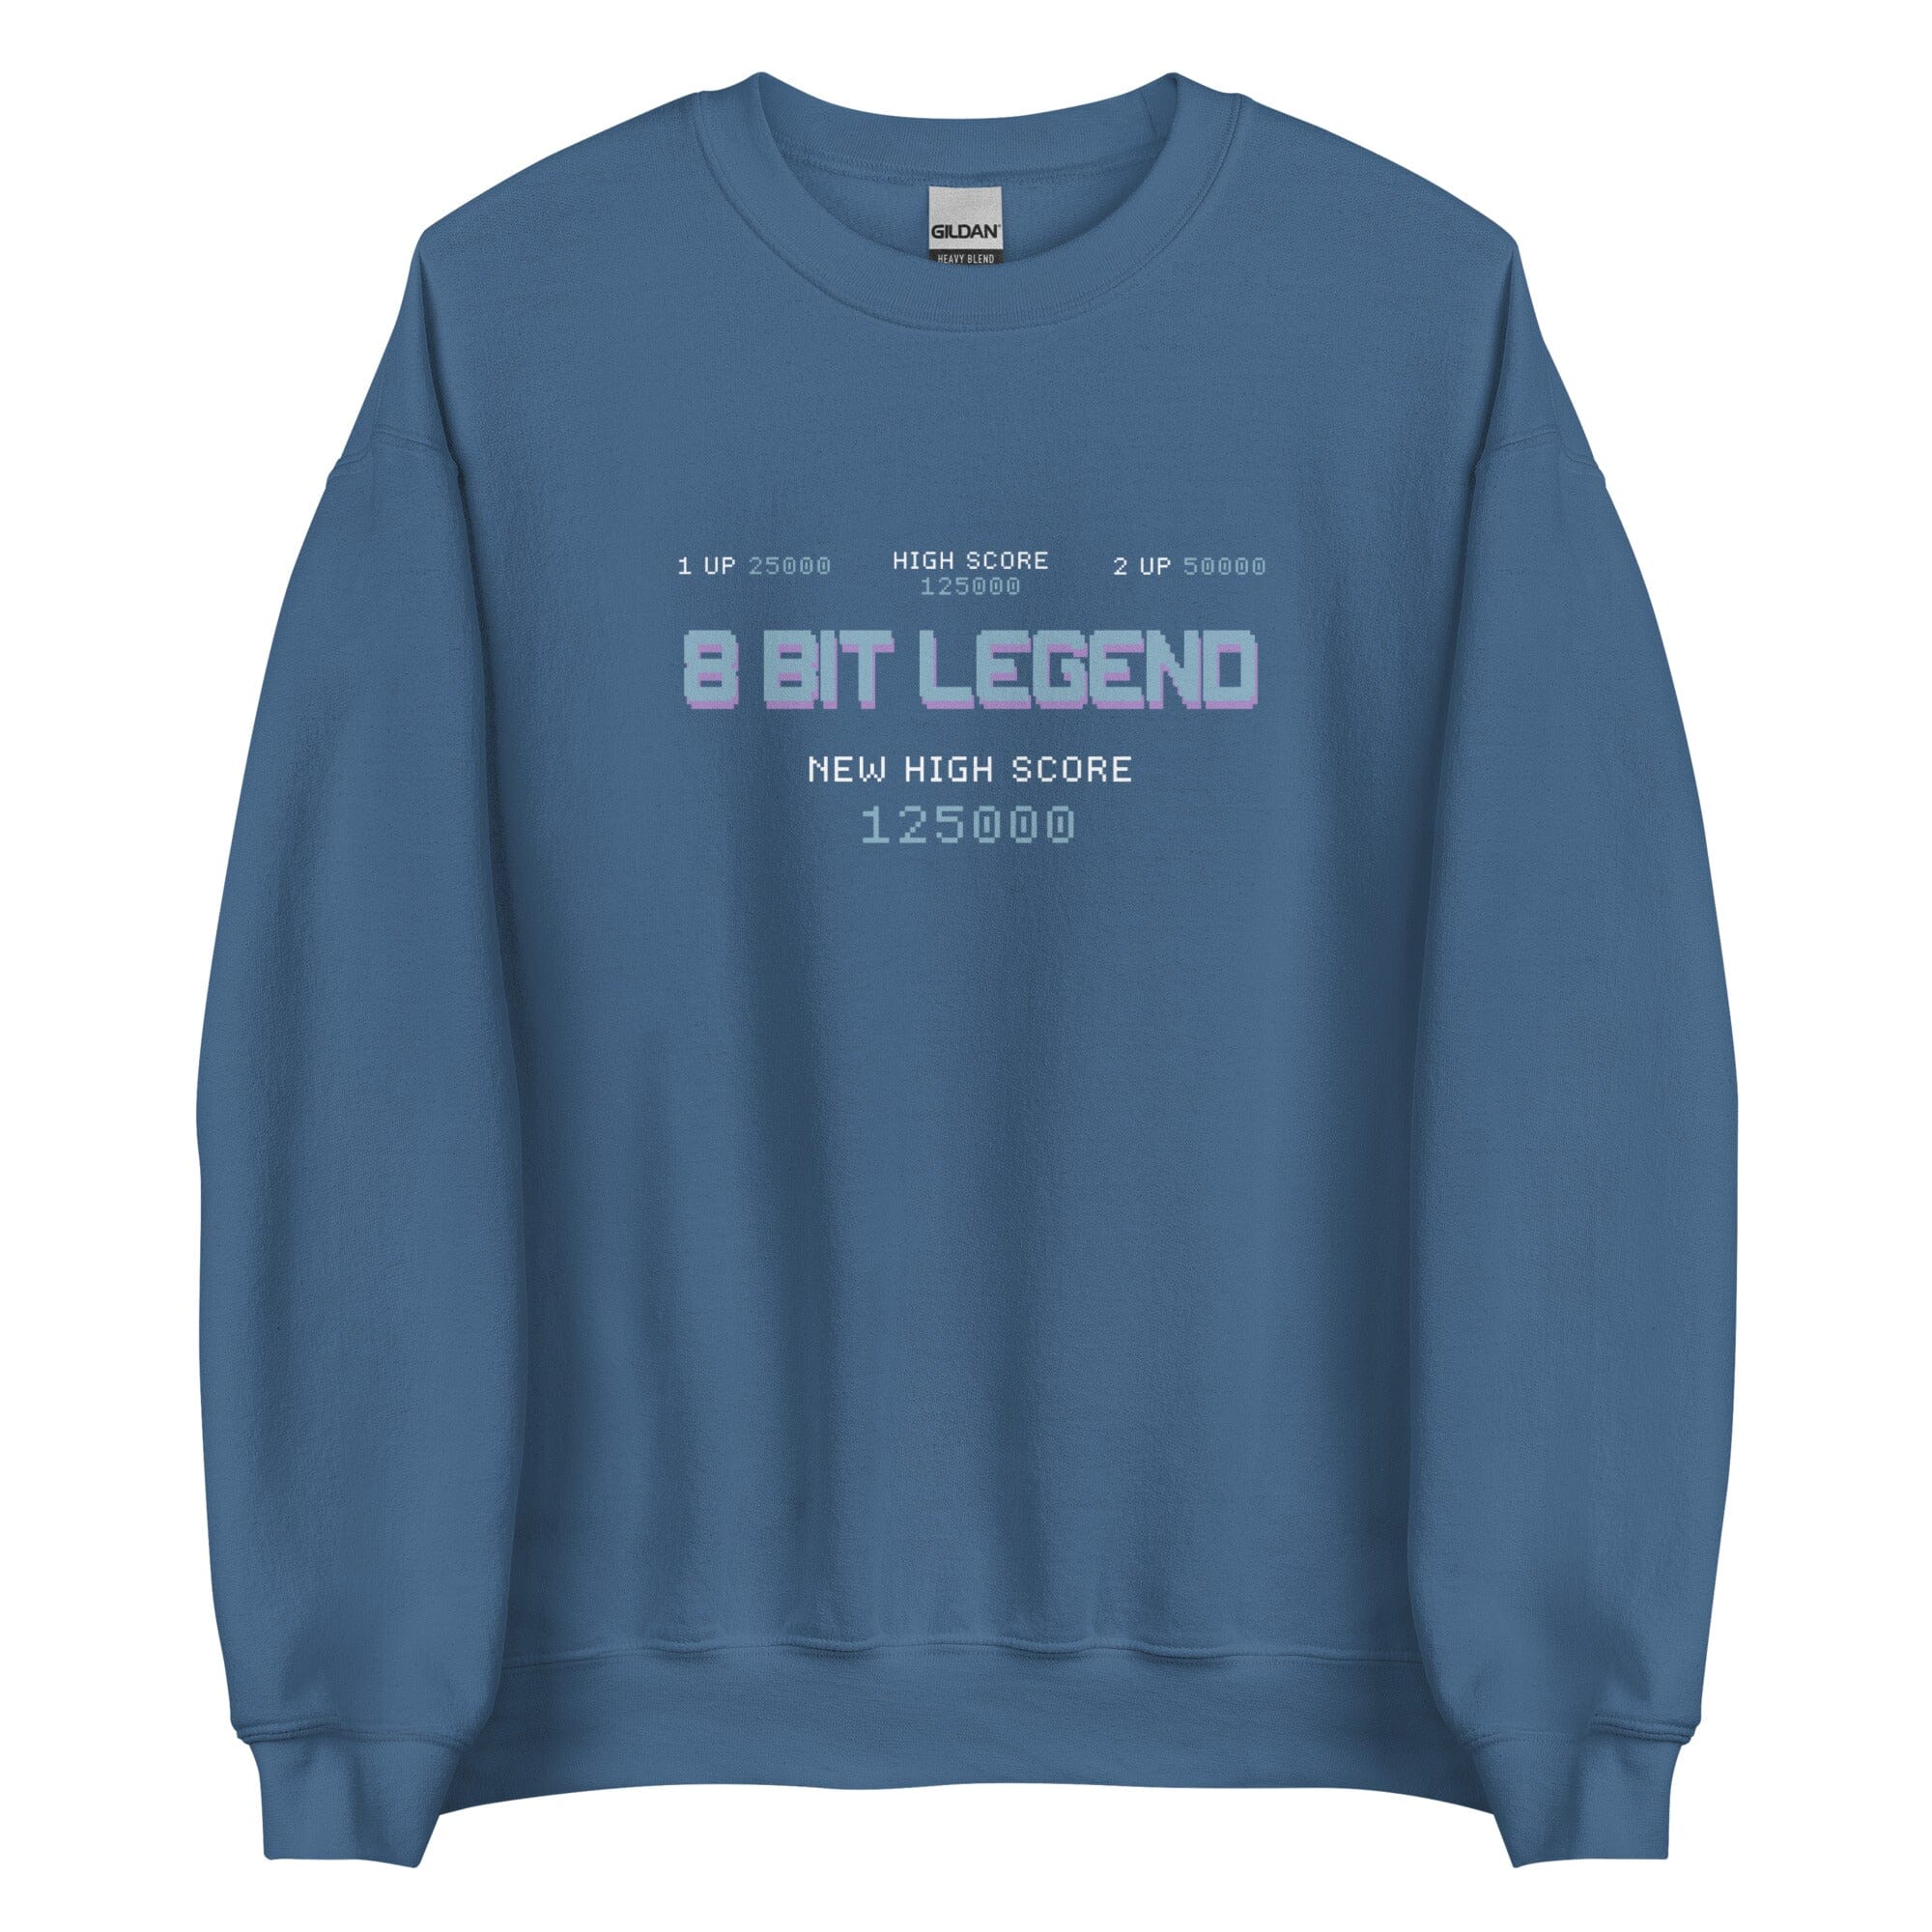 8-Bit Legend | Unisex Sweatshirt | Retro Gaming Threads & Thistles Inventory Indigo Blue S 